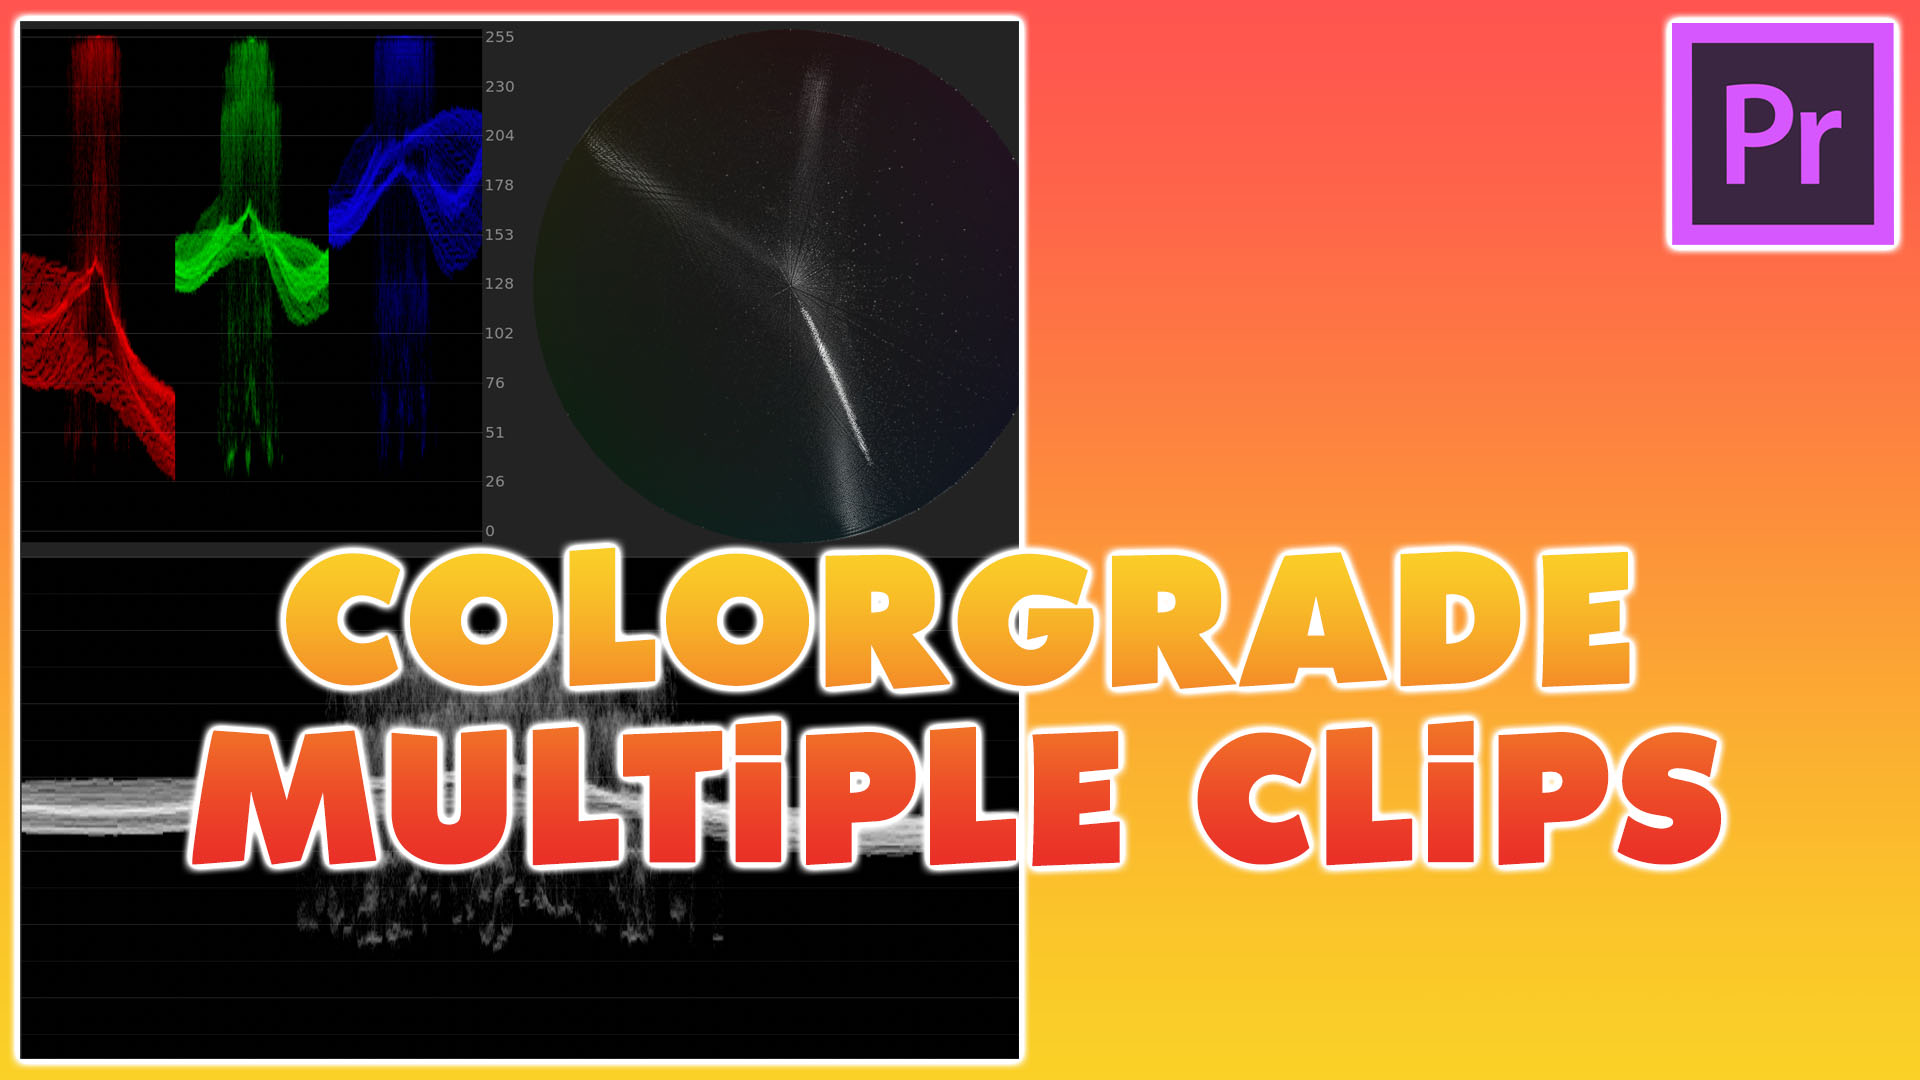 Colorgrade Multiple Video Clips + How to Colorgrade Source File (Premiere Pro Tutorial)